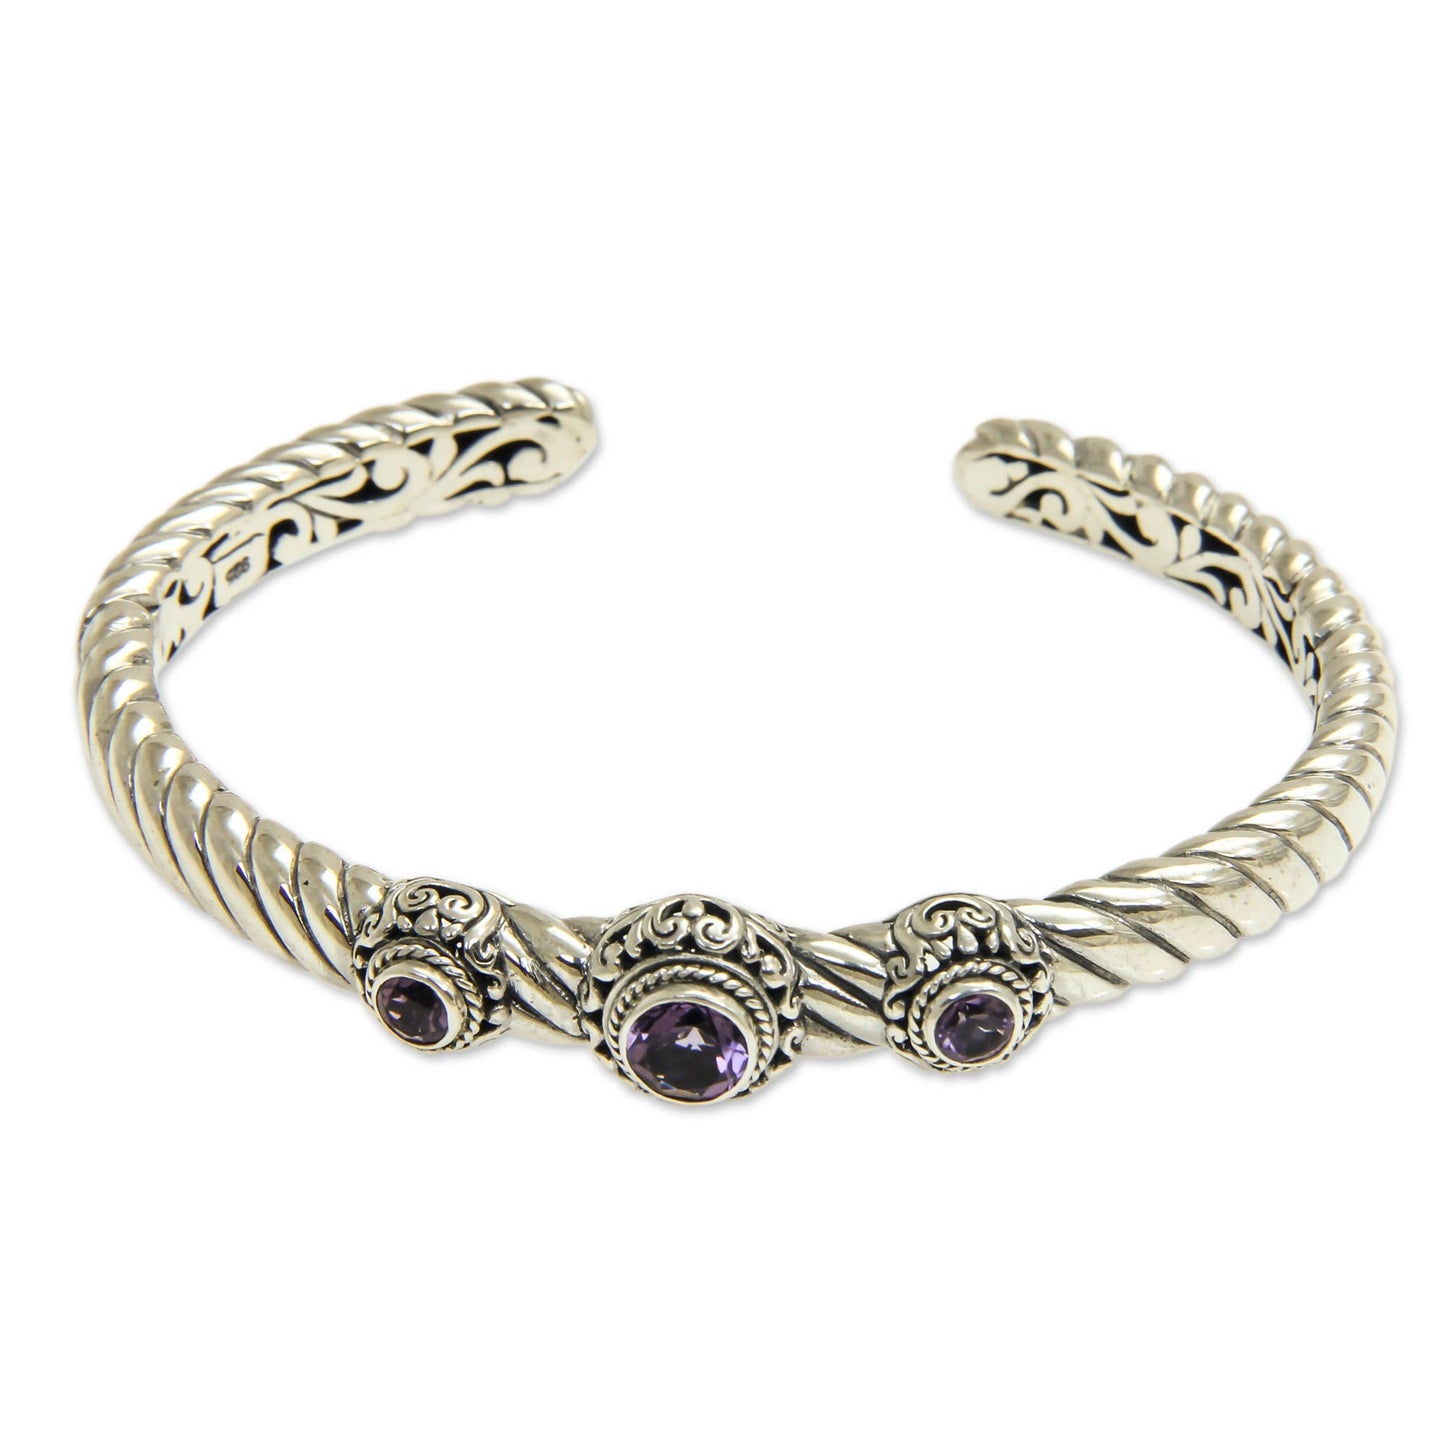 Triple Crown in Purple Amethyst and Sterling Silver Cuff Bracelet from Bali